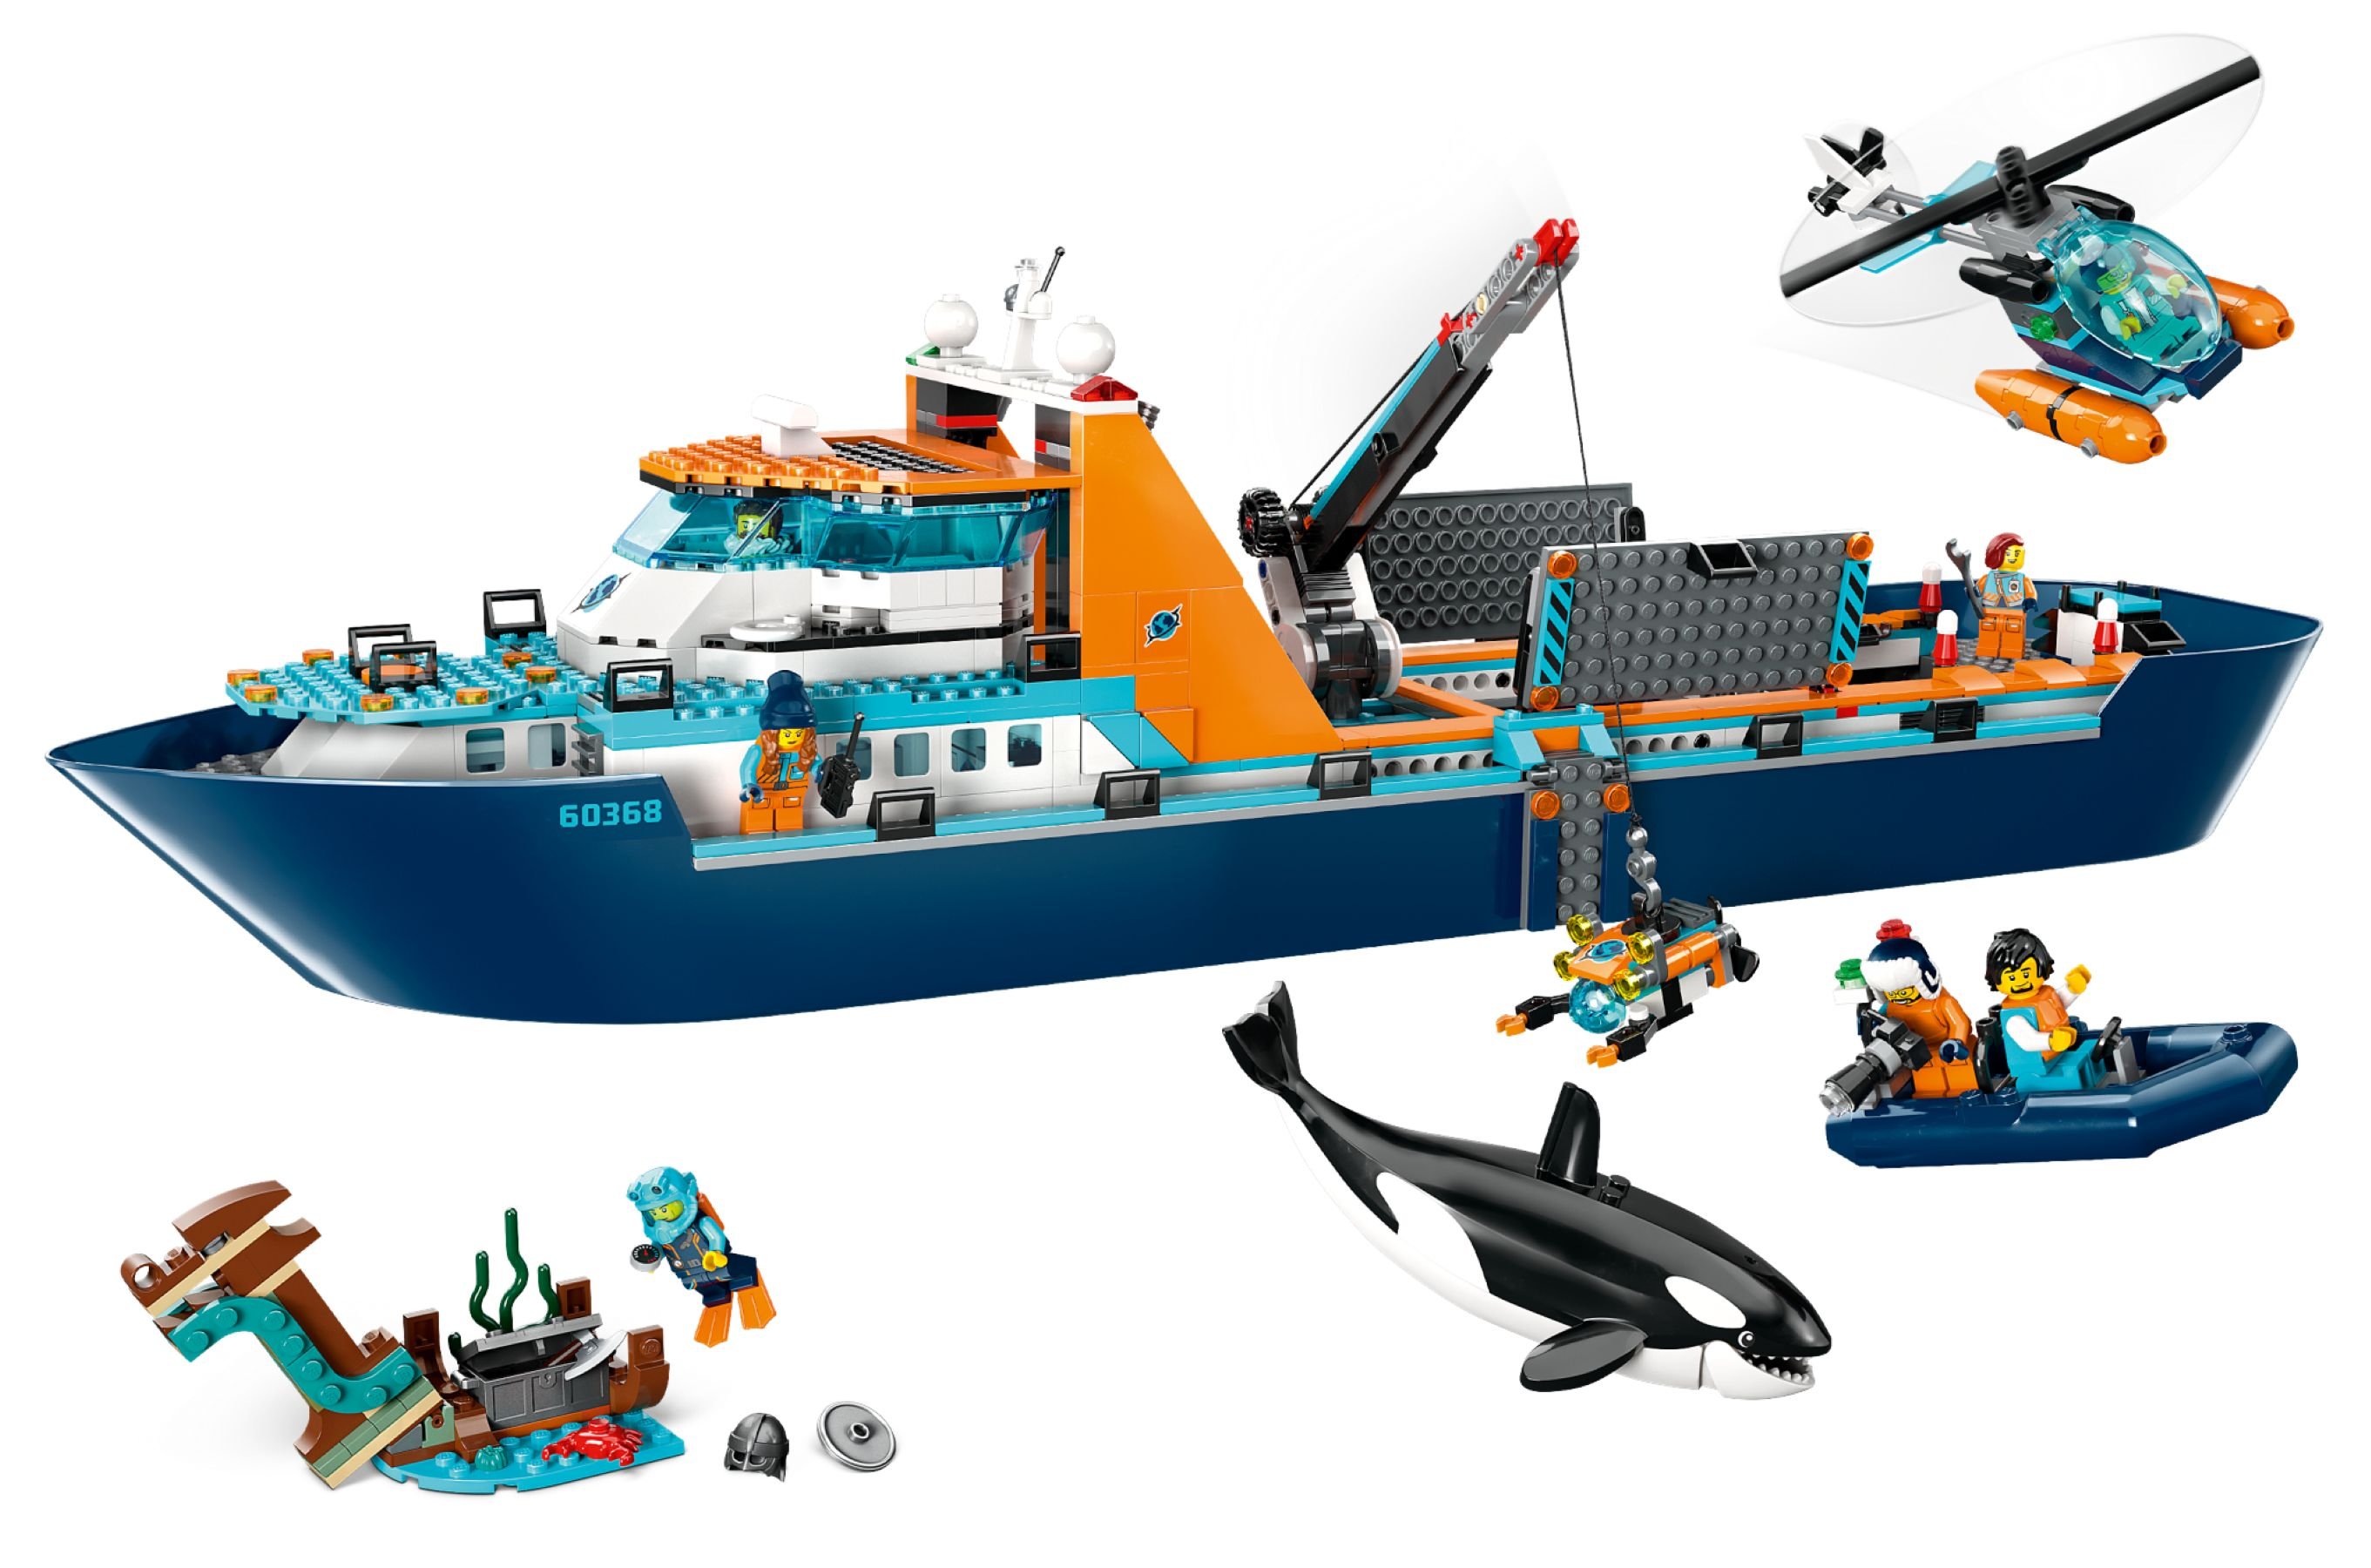 LEGO City 60368 Arktis-Forschungsschiff LEGO_60368_alt2.jpg